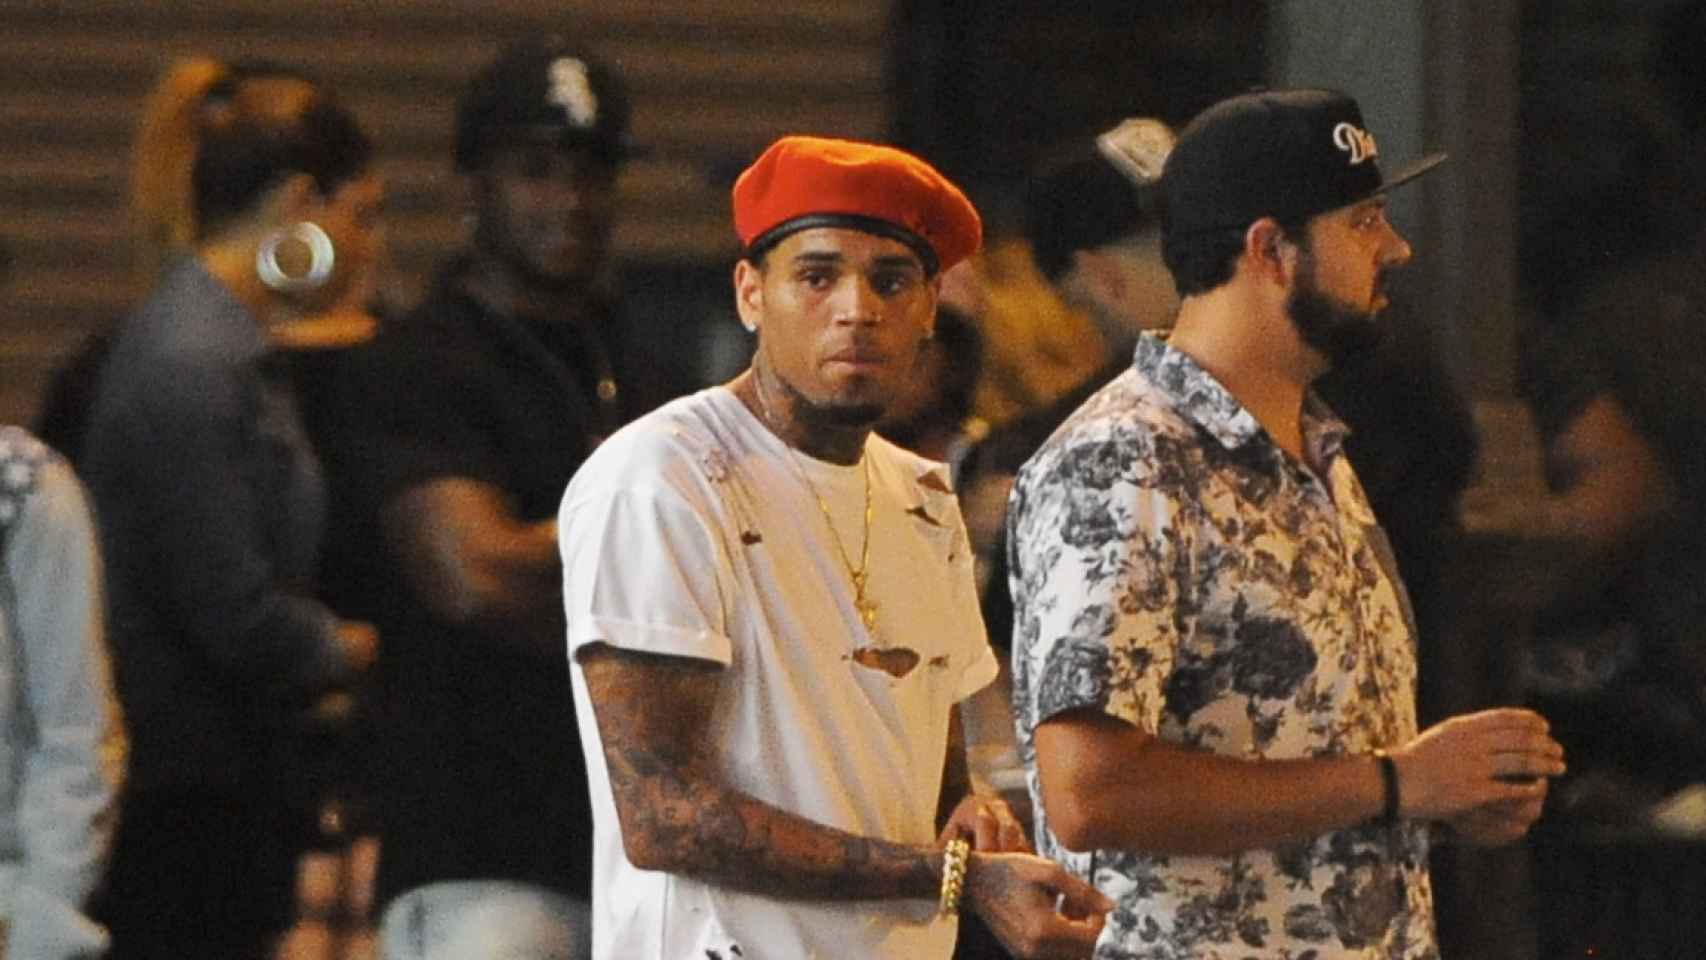 Chris Brown en una imagen de archivo